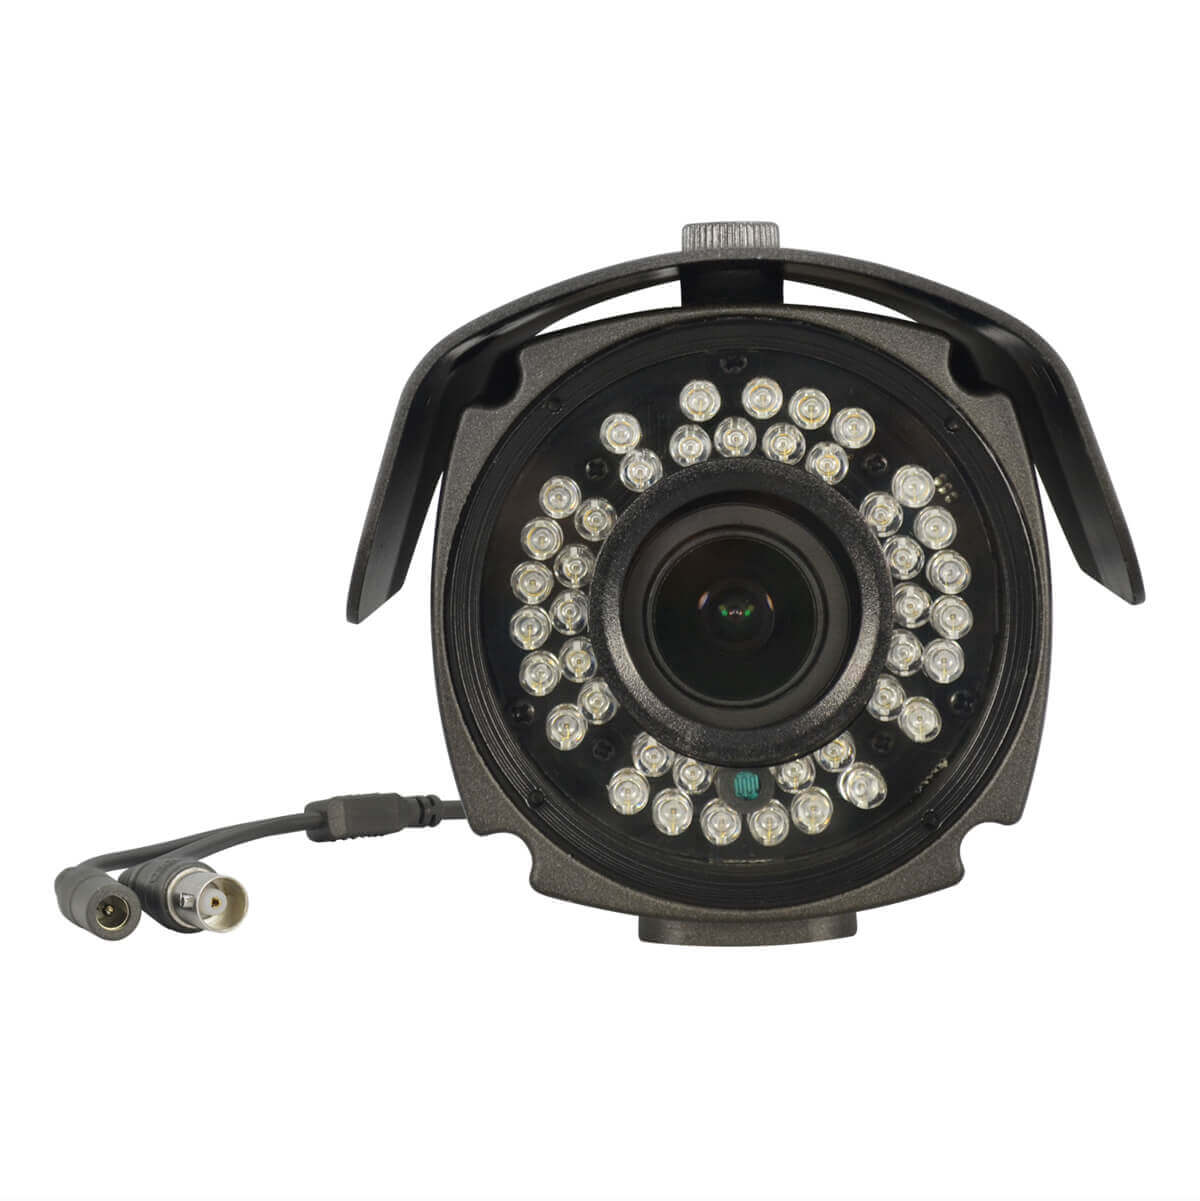 Camara tipo bazuca, Sensor CCD Sony 1/3, 800TVL, 42 LED, 40m IR, IP66